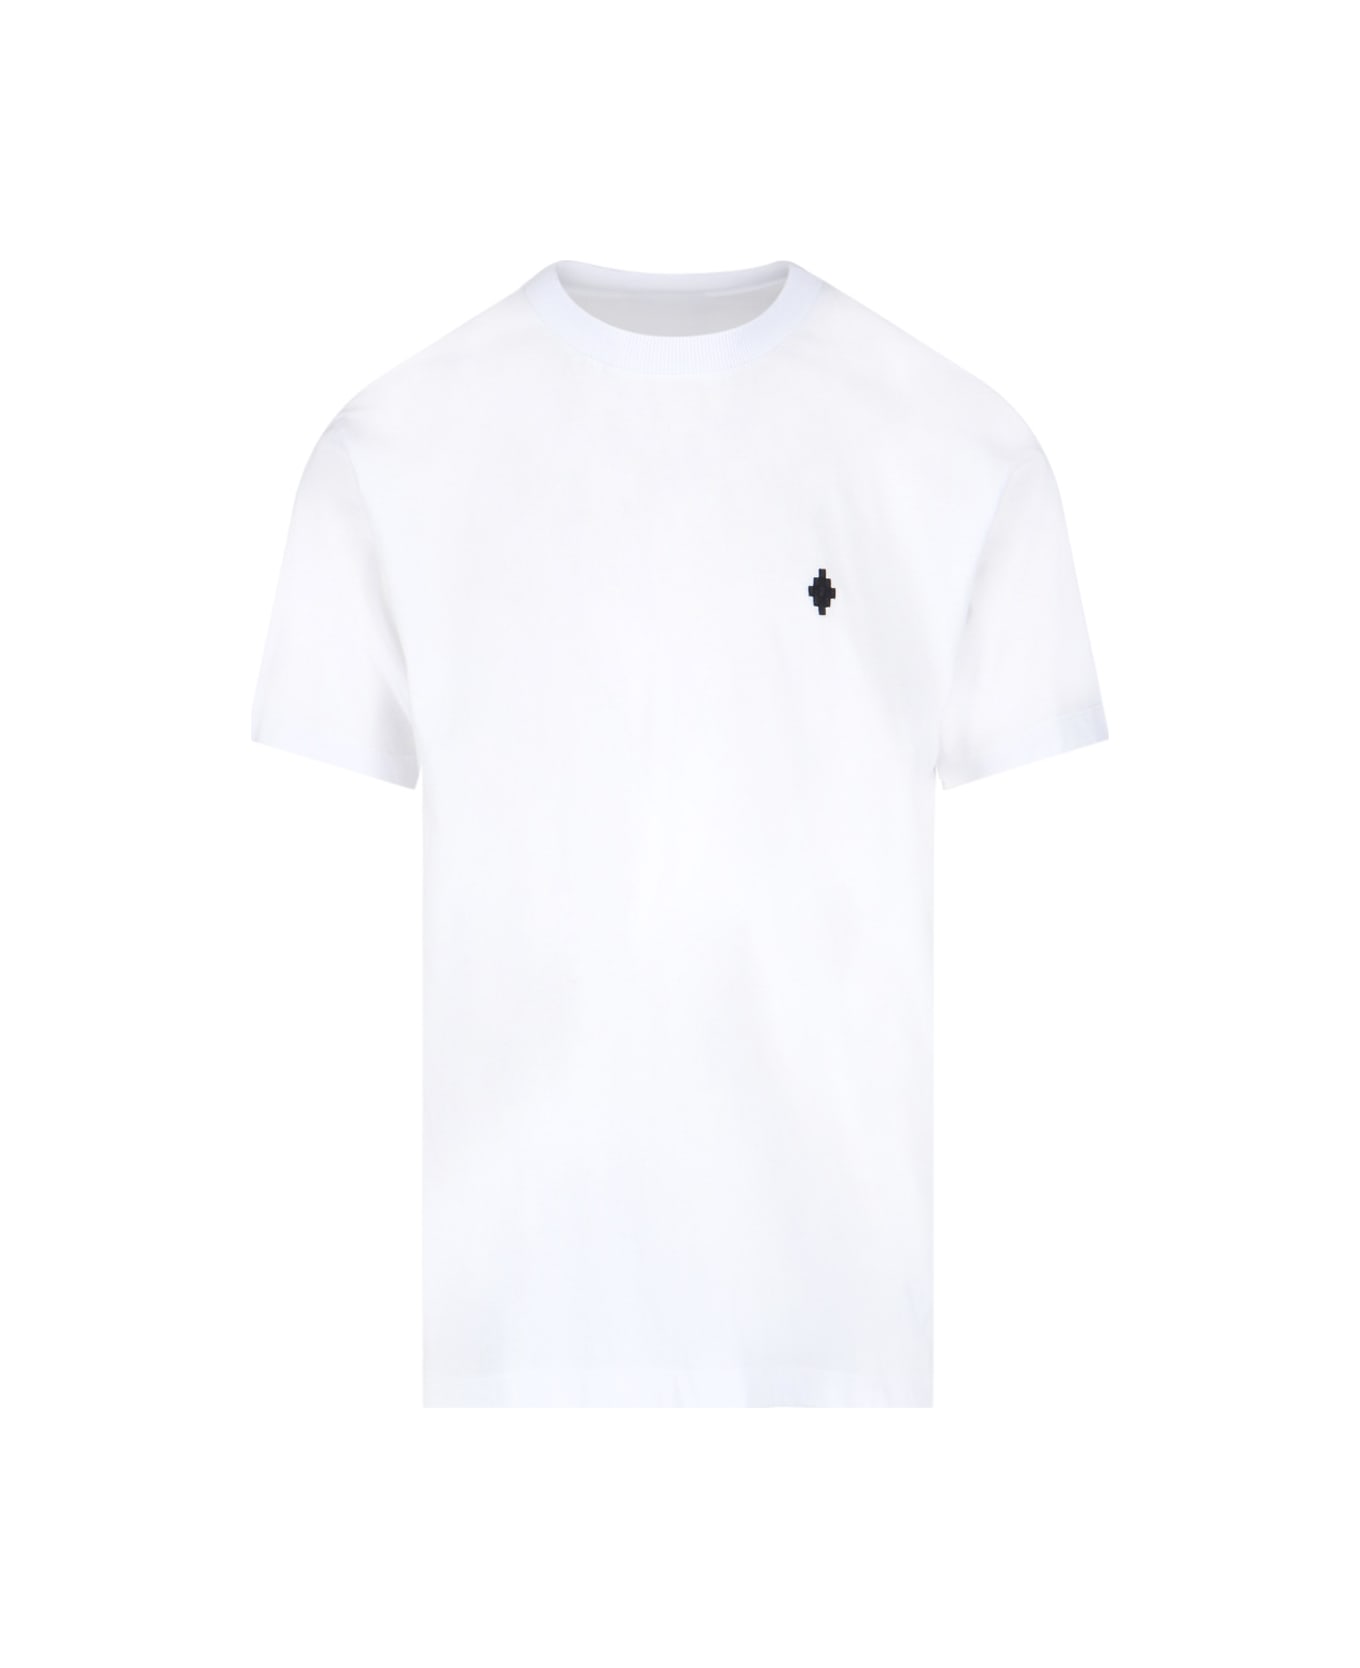 Marcelo Burlon T-Shirt - White